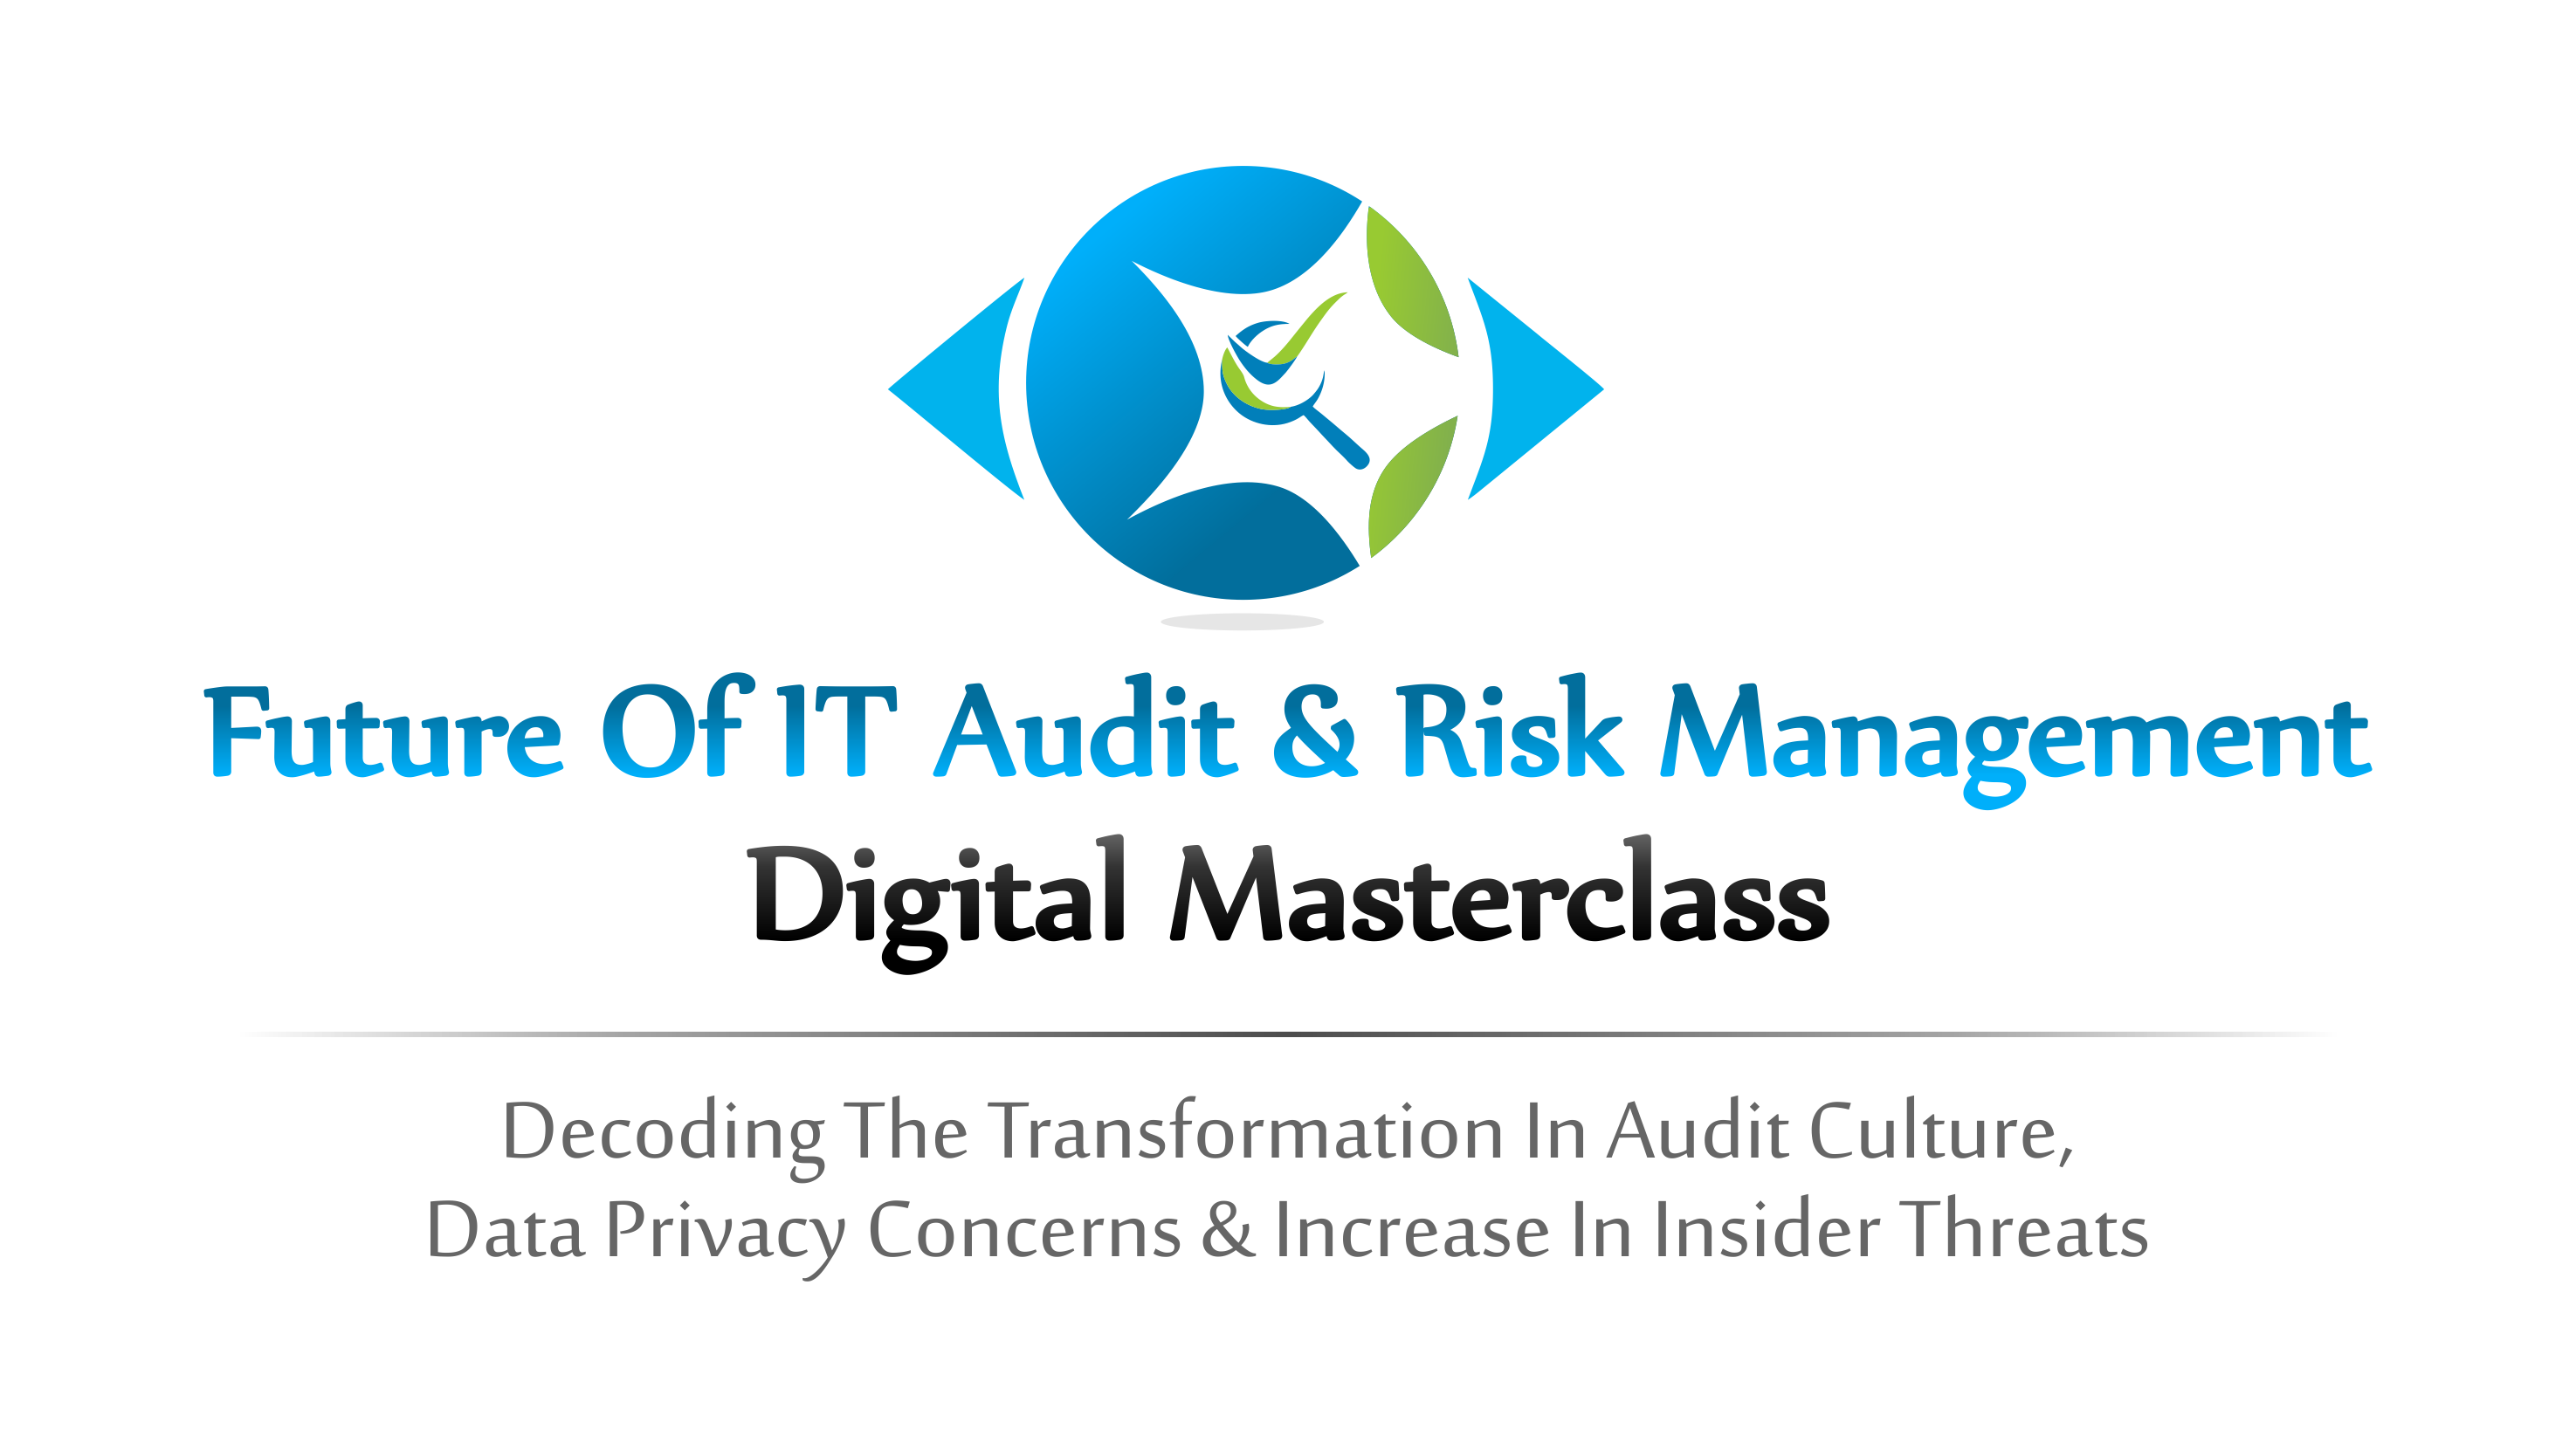 Future Of IT Audit & Risk Management Digital Masterclass